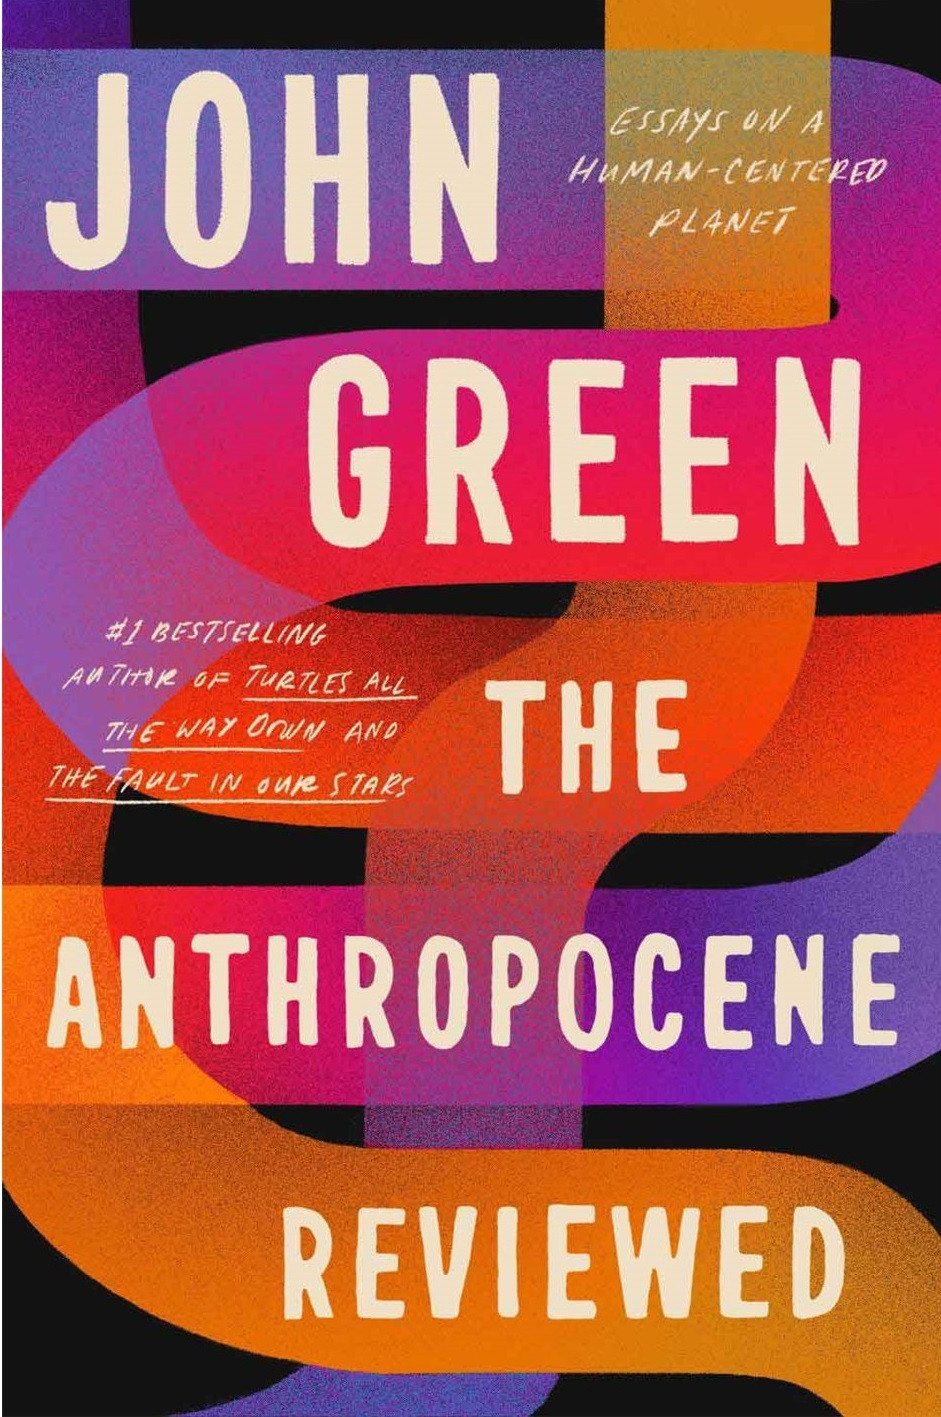 The anthropocene